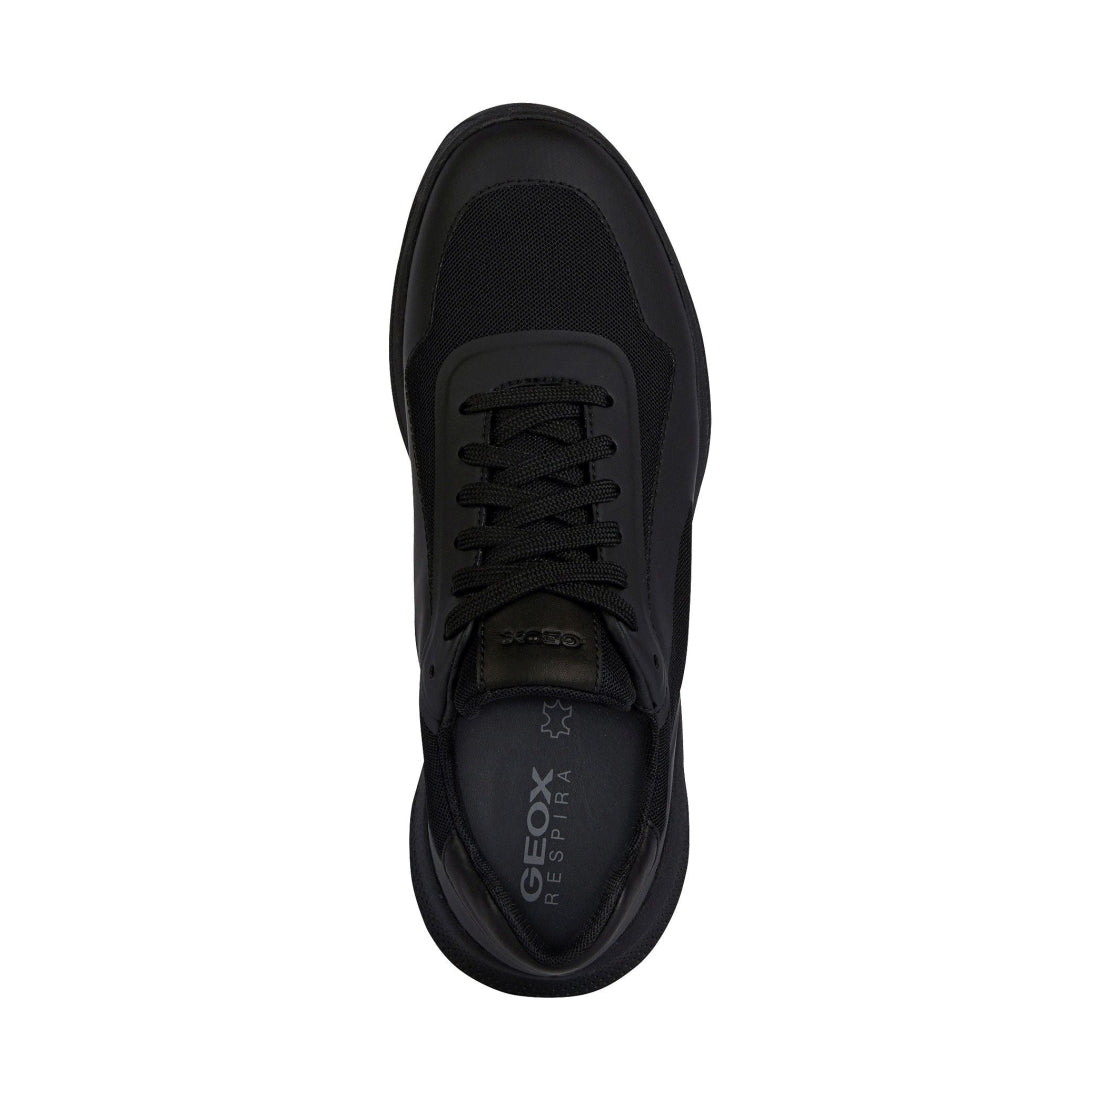 Geox mens black pg1x sport shoes | Vilbury London